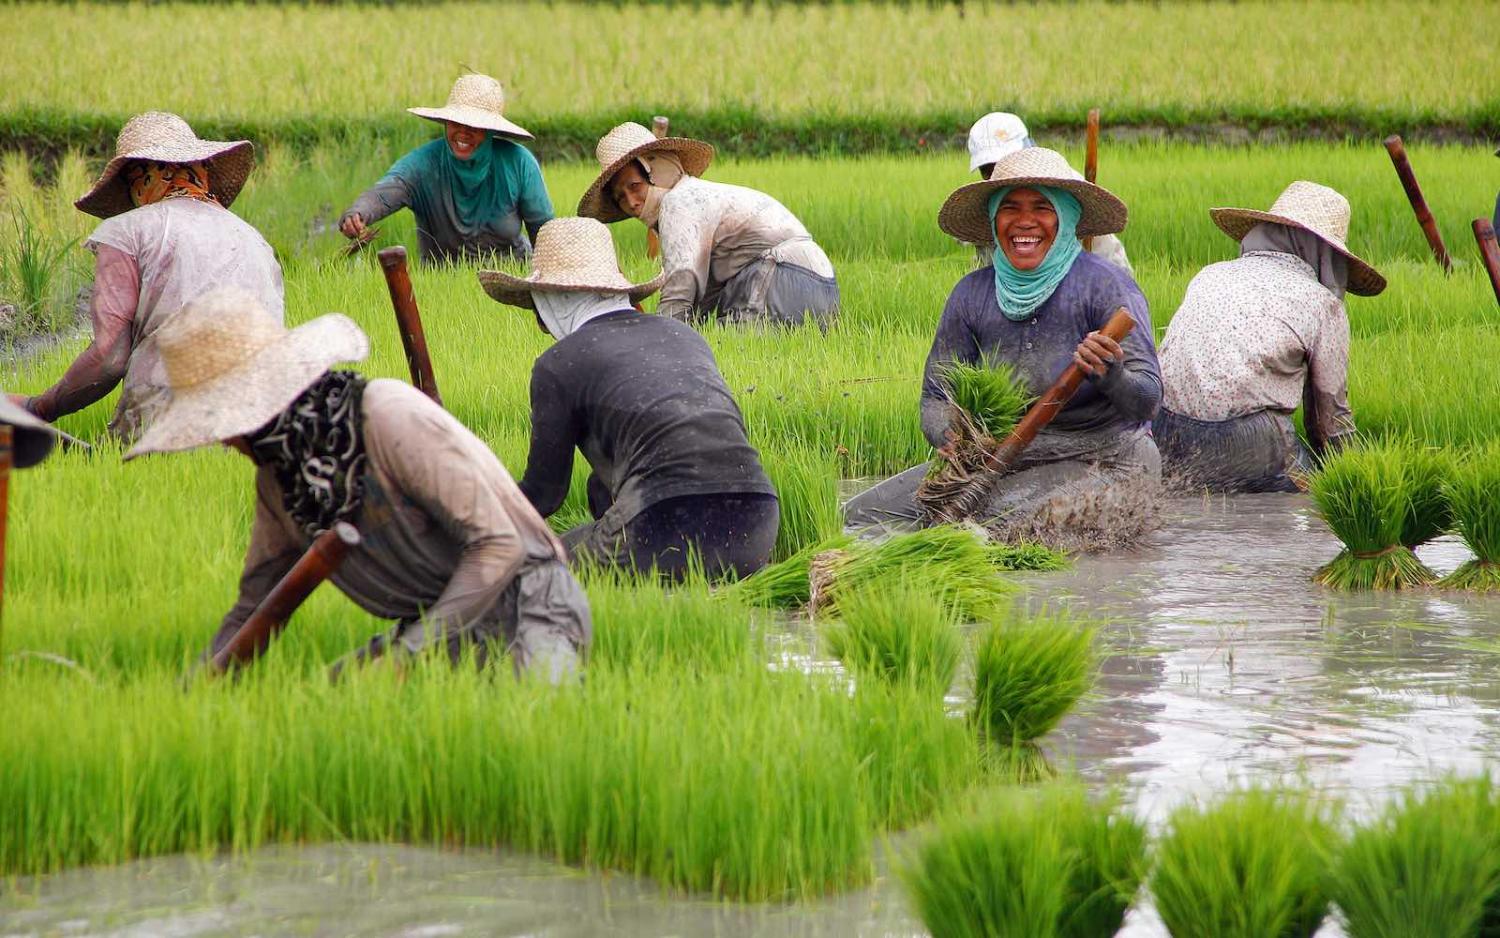 Women farmers harvesting rice in Nueva Vizcaya, Philippines, 2015 (International Labour Organisation/Flickr)